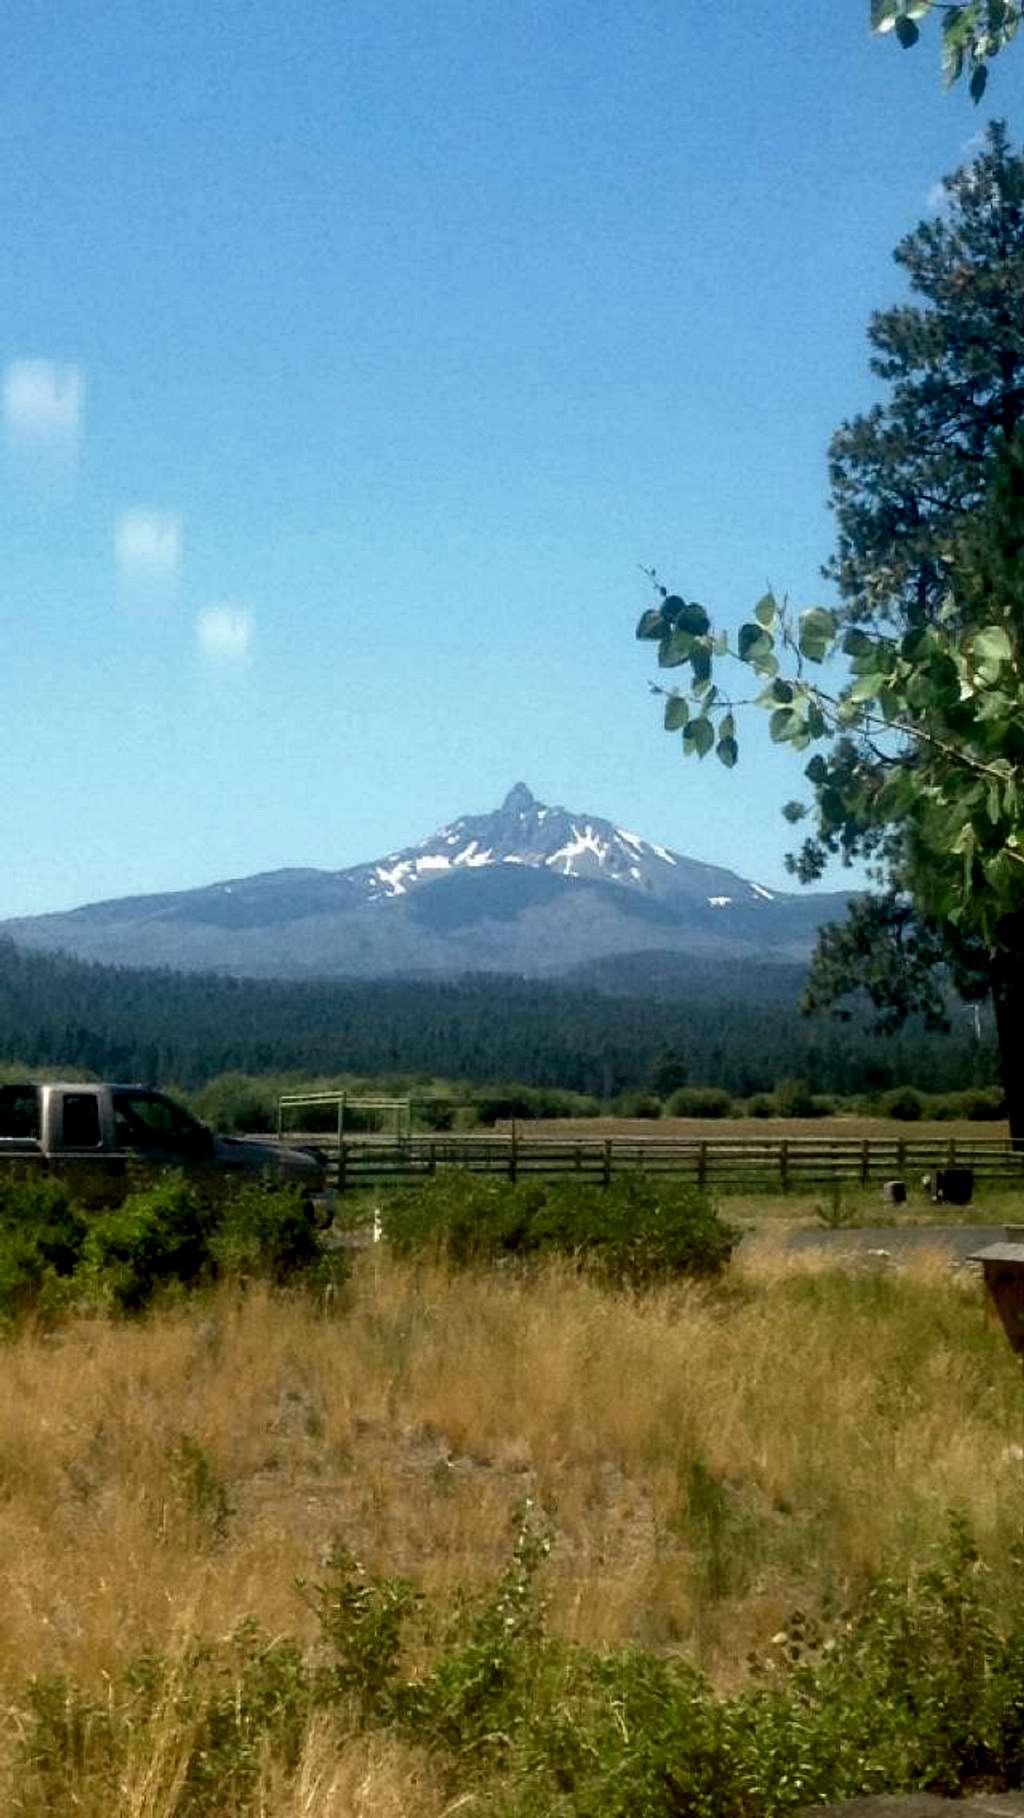 Mt. Washington seen from Black Butte Ranch